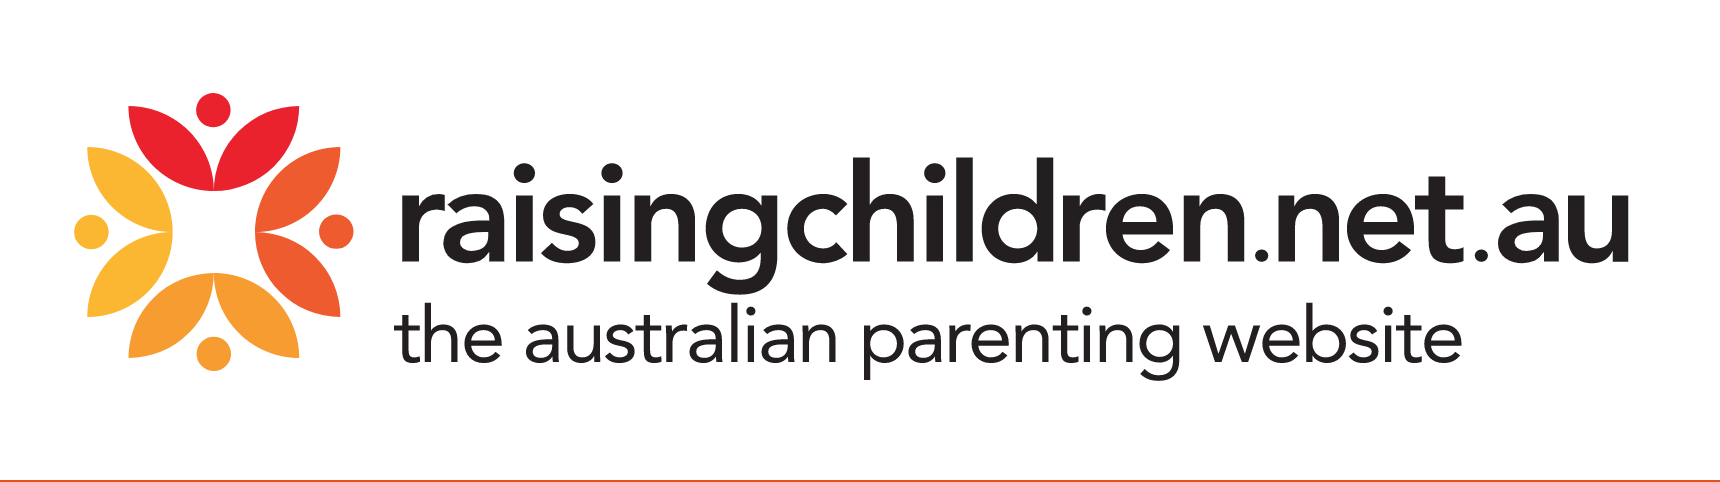 The Raising Children Network